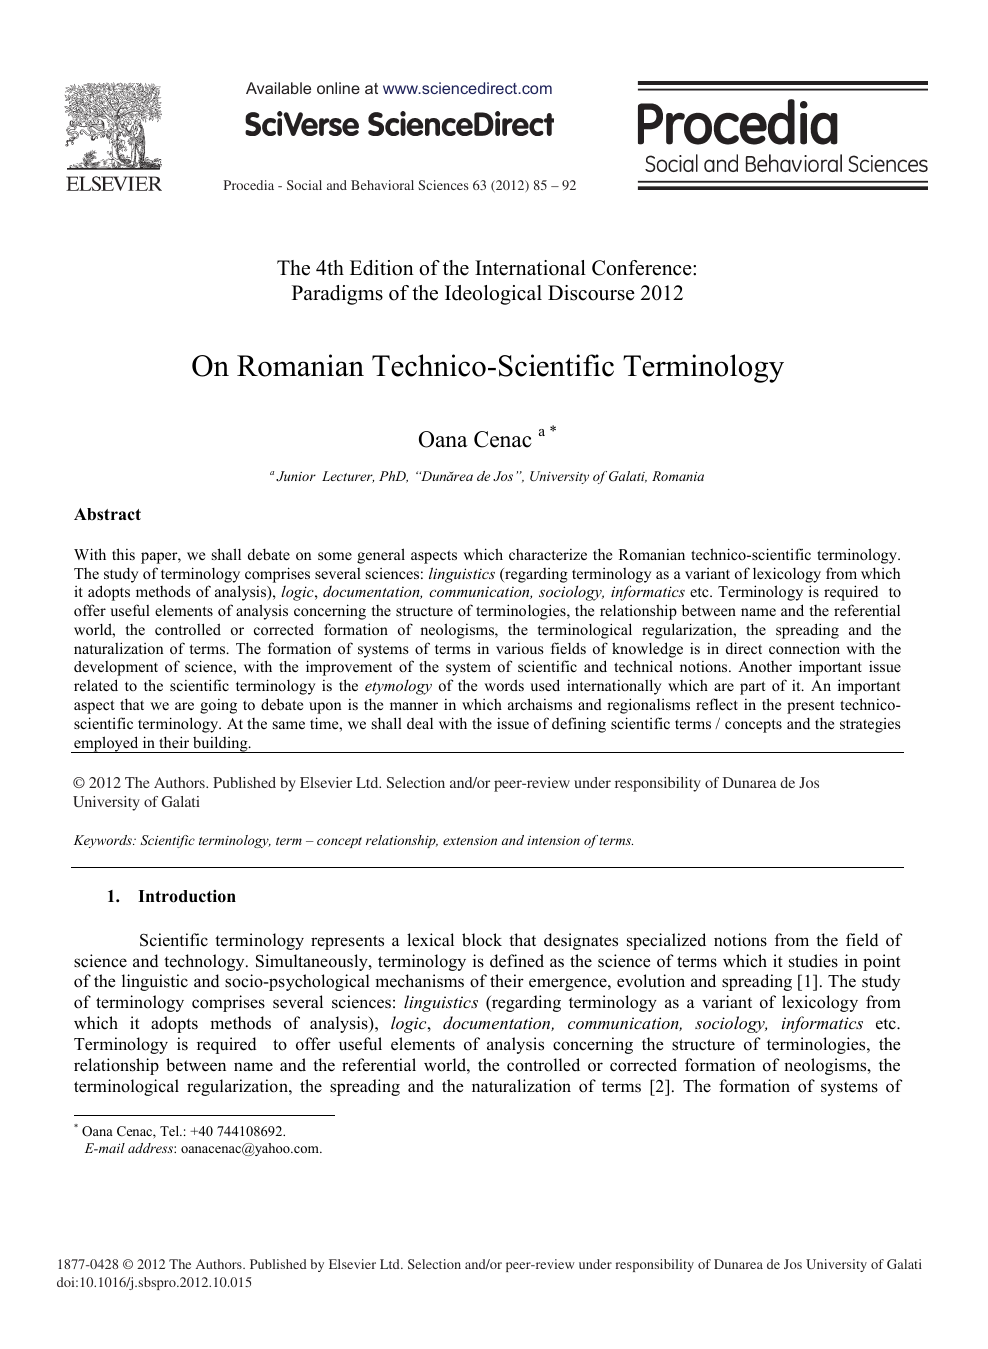 On Romanian Technico Scientific Terminology Topic Of Research